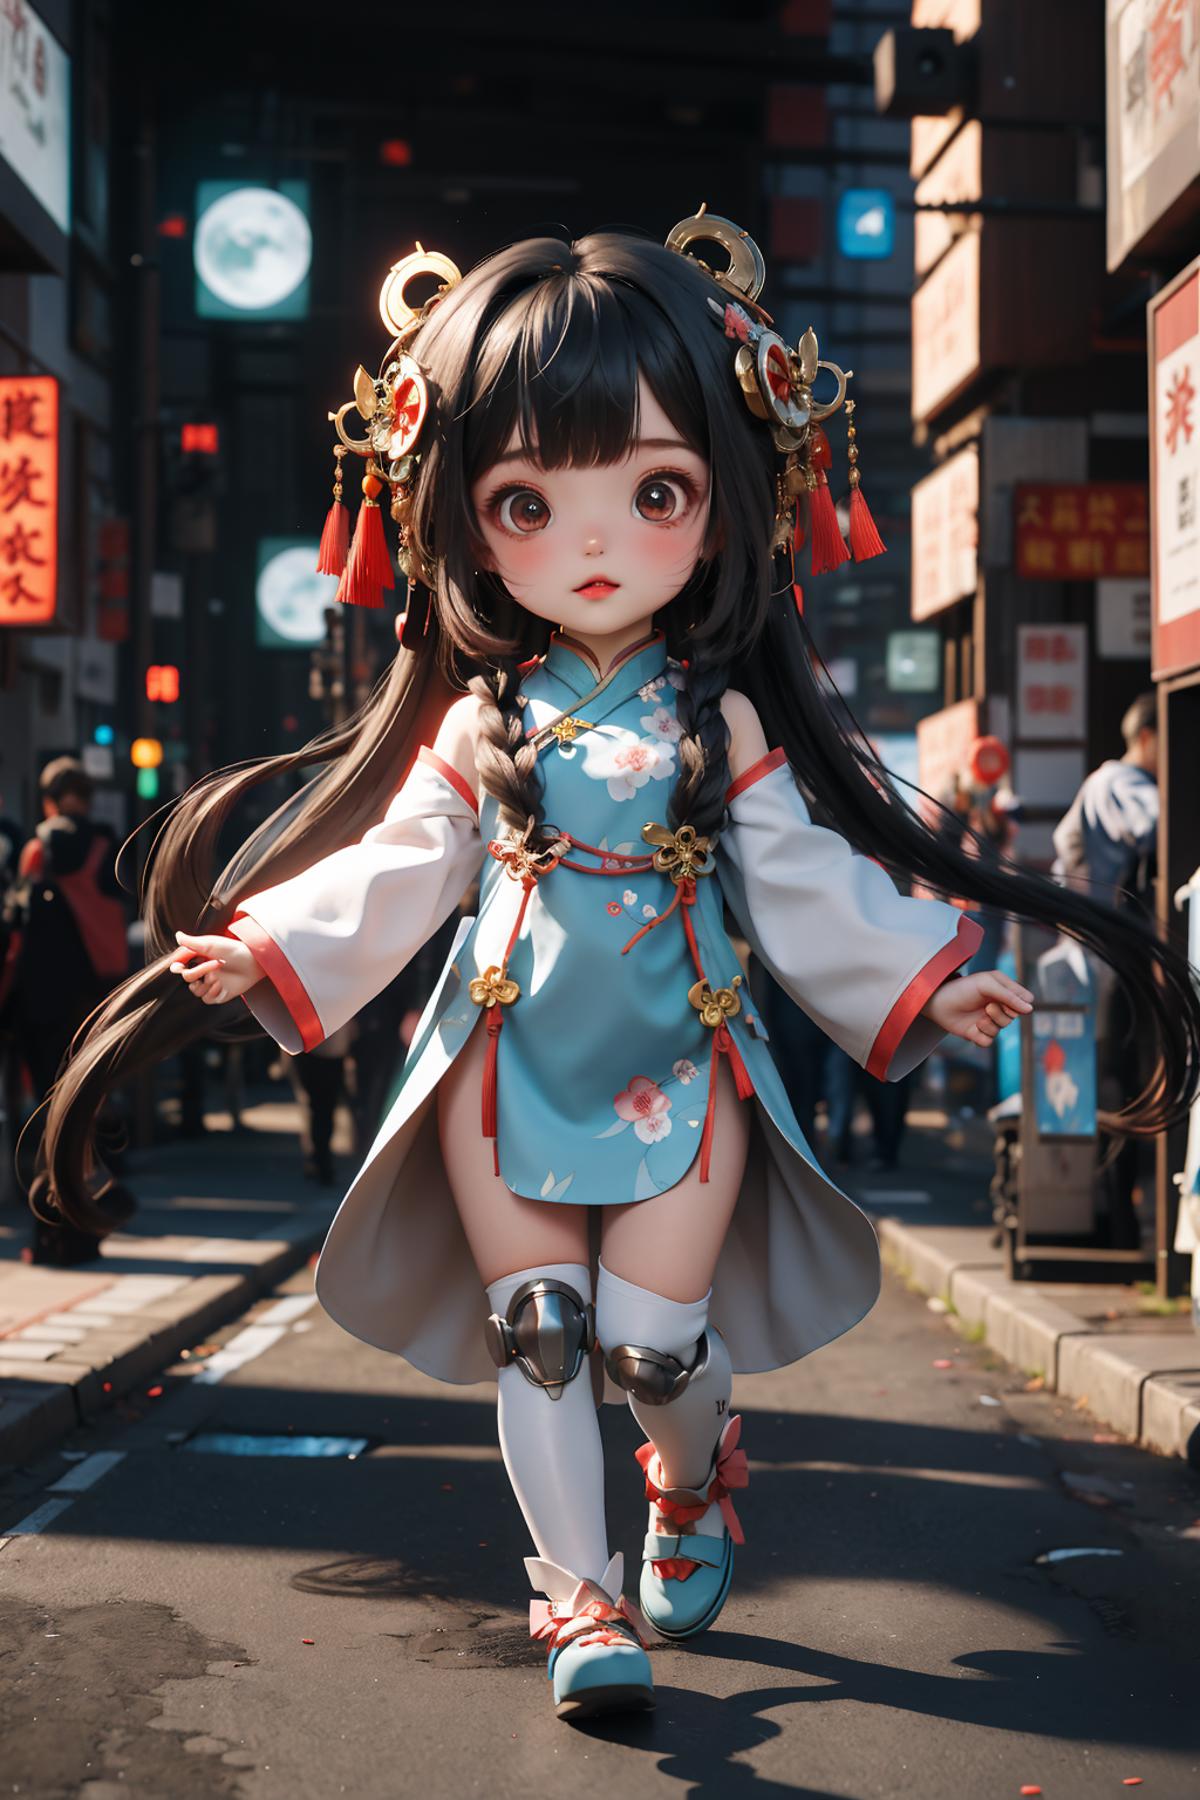 国风萌玩 | Chinese style cute doll image by XiongSan